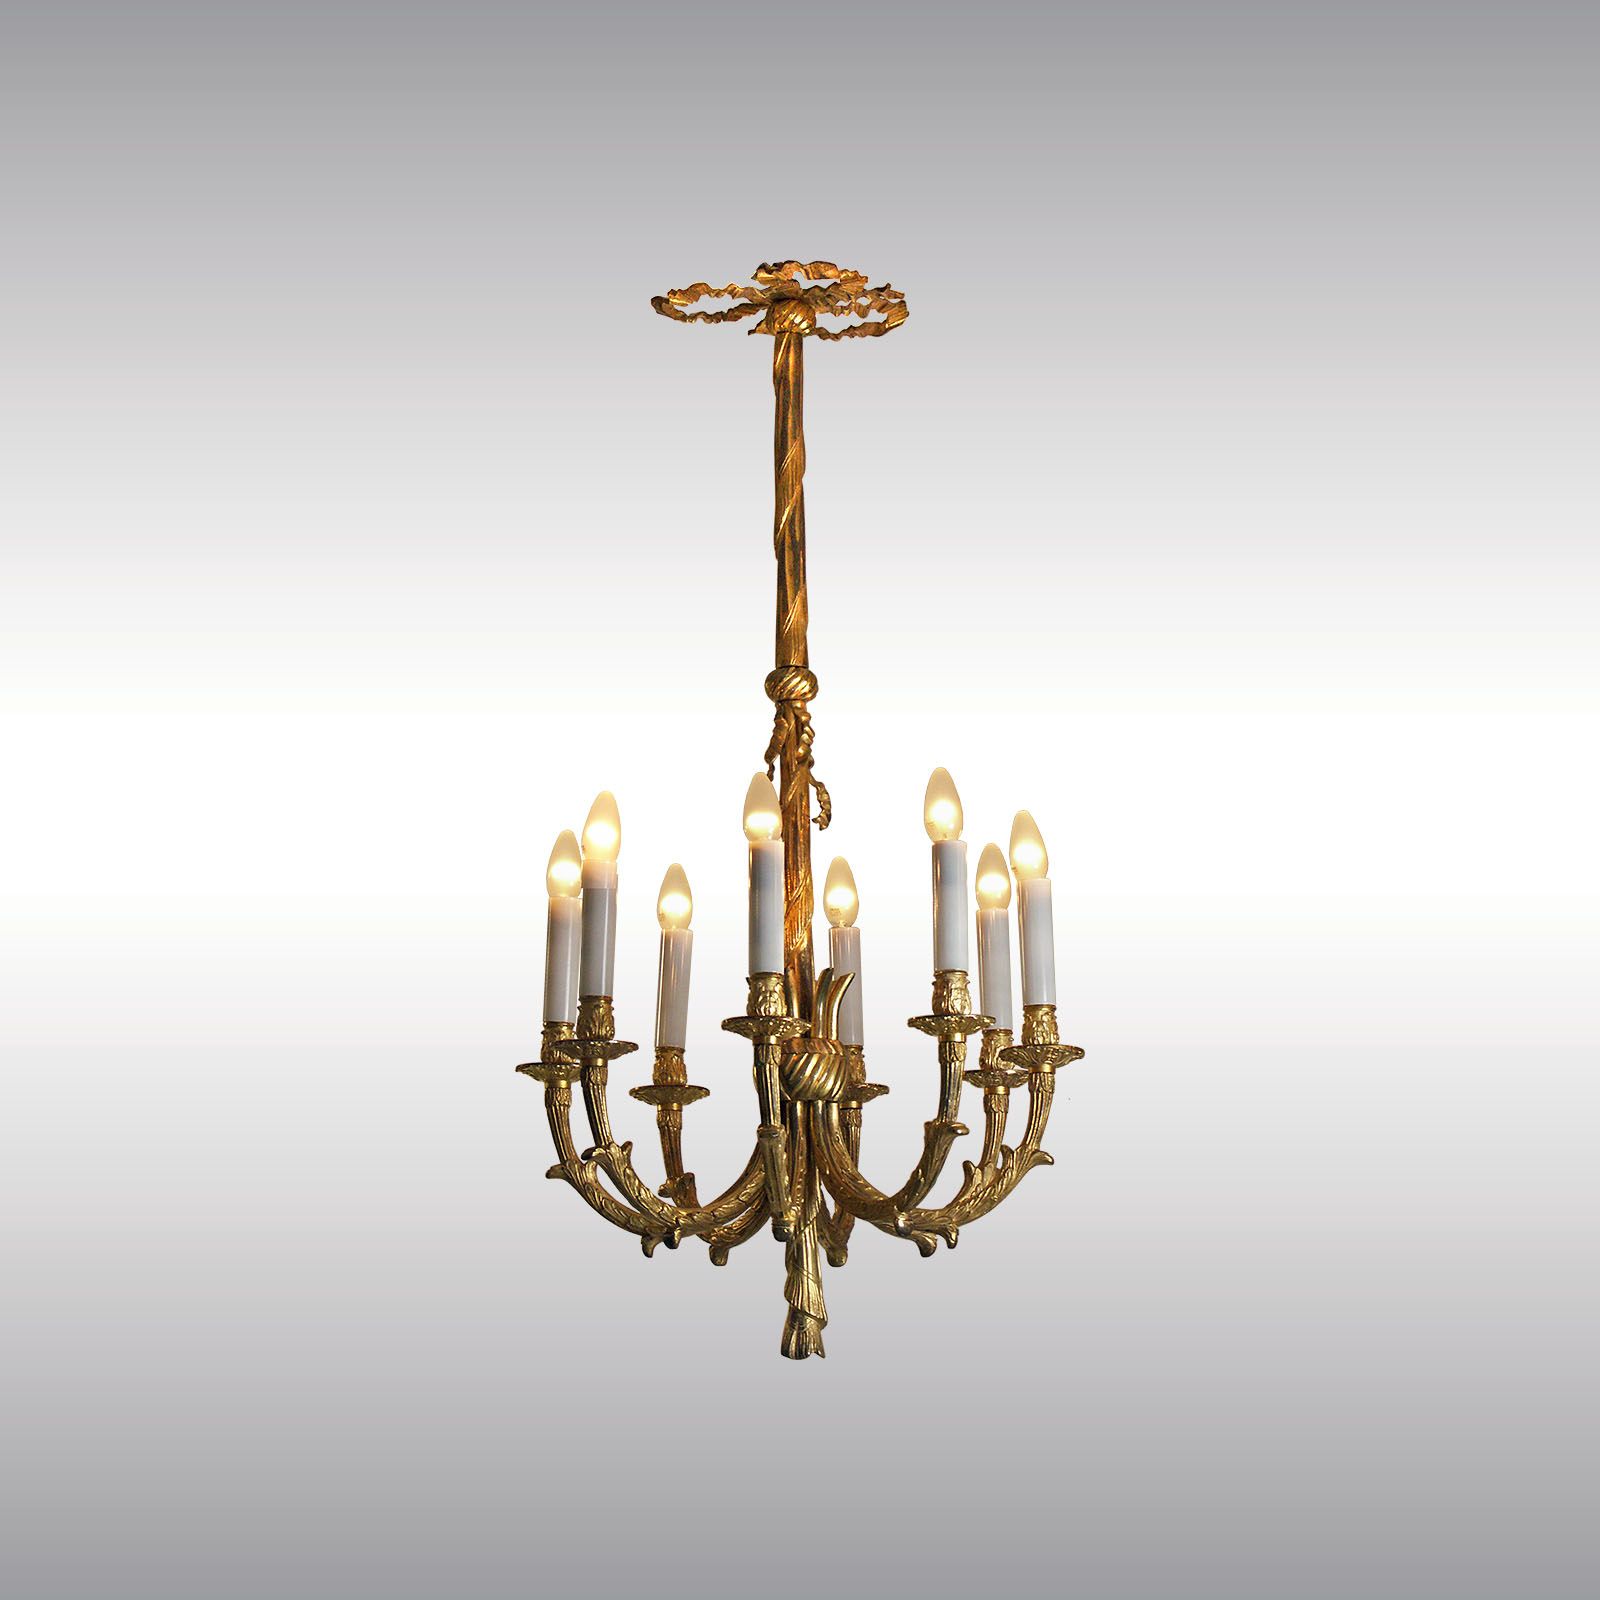 WOKA LAMPS VIENNA - OrderNr.: 70038|Bronzeluster - Design: Austrian Mastercraft